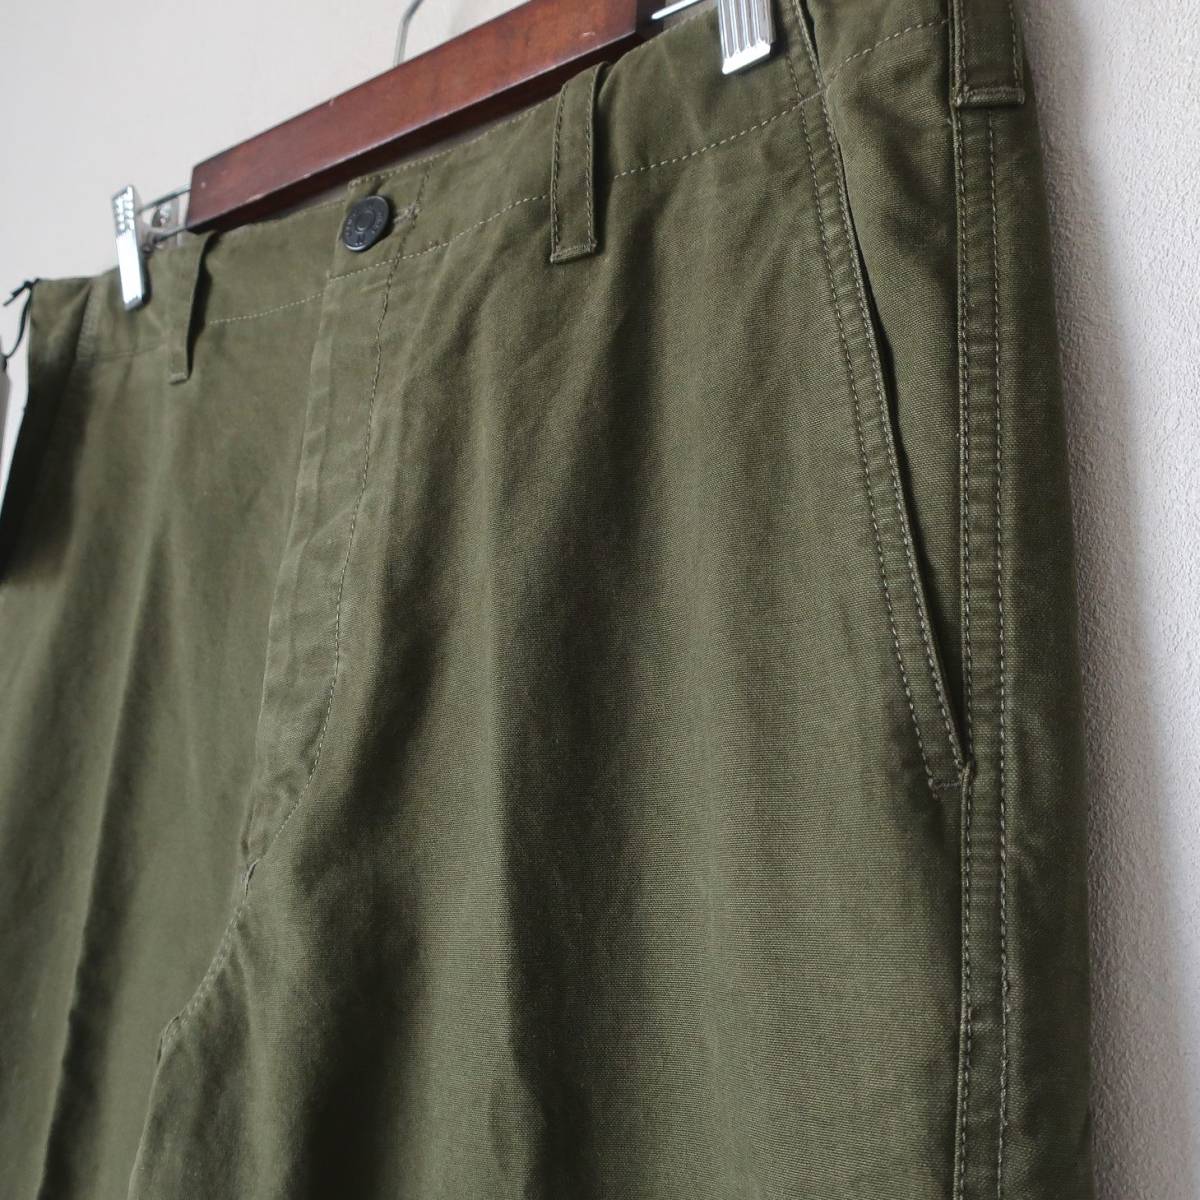  new goods unused PT TORINO men's Trend chinos tapered pants slacks pants PT01 PT05 green green olive W34 XL size 